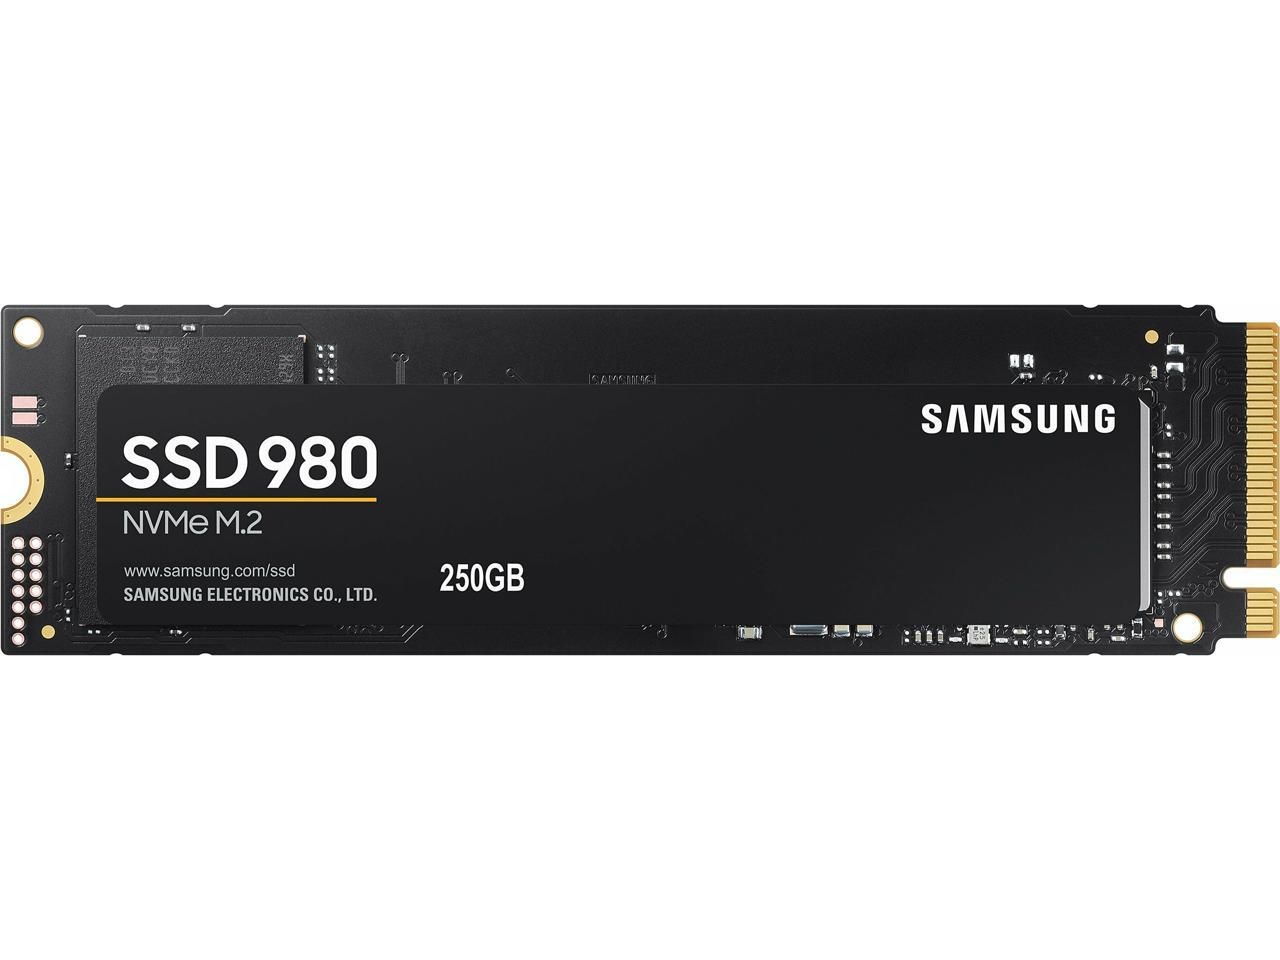 Samsung 980 250gb. Твердотельный накопитель SSD M.2 2280 500gb Samsung 980 [MZ-v8v500bw] (r3100/w2600mb/s)_CN. Solid State Drive 980. MZ-v8v1t0bw. SSD Озон.